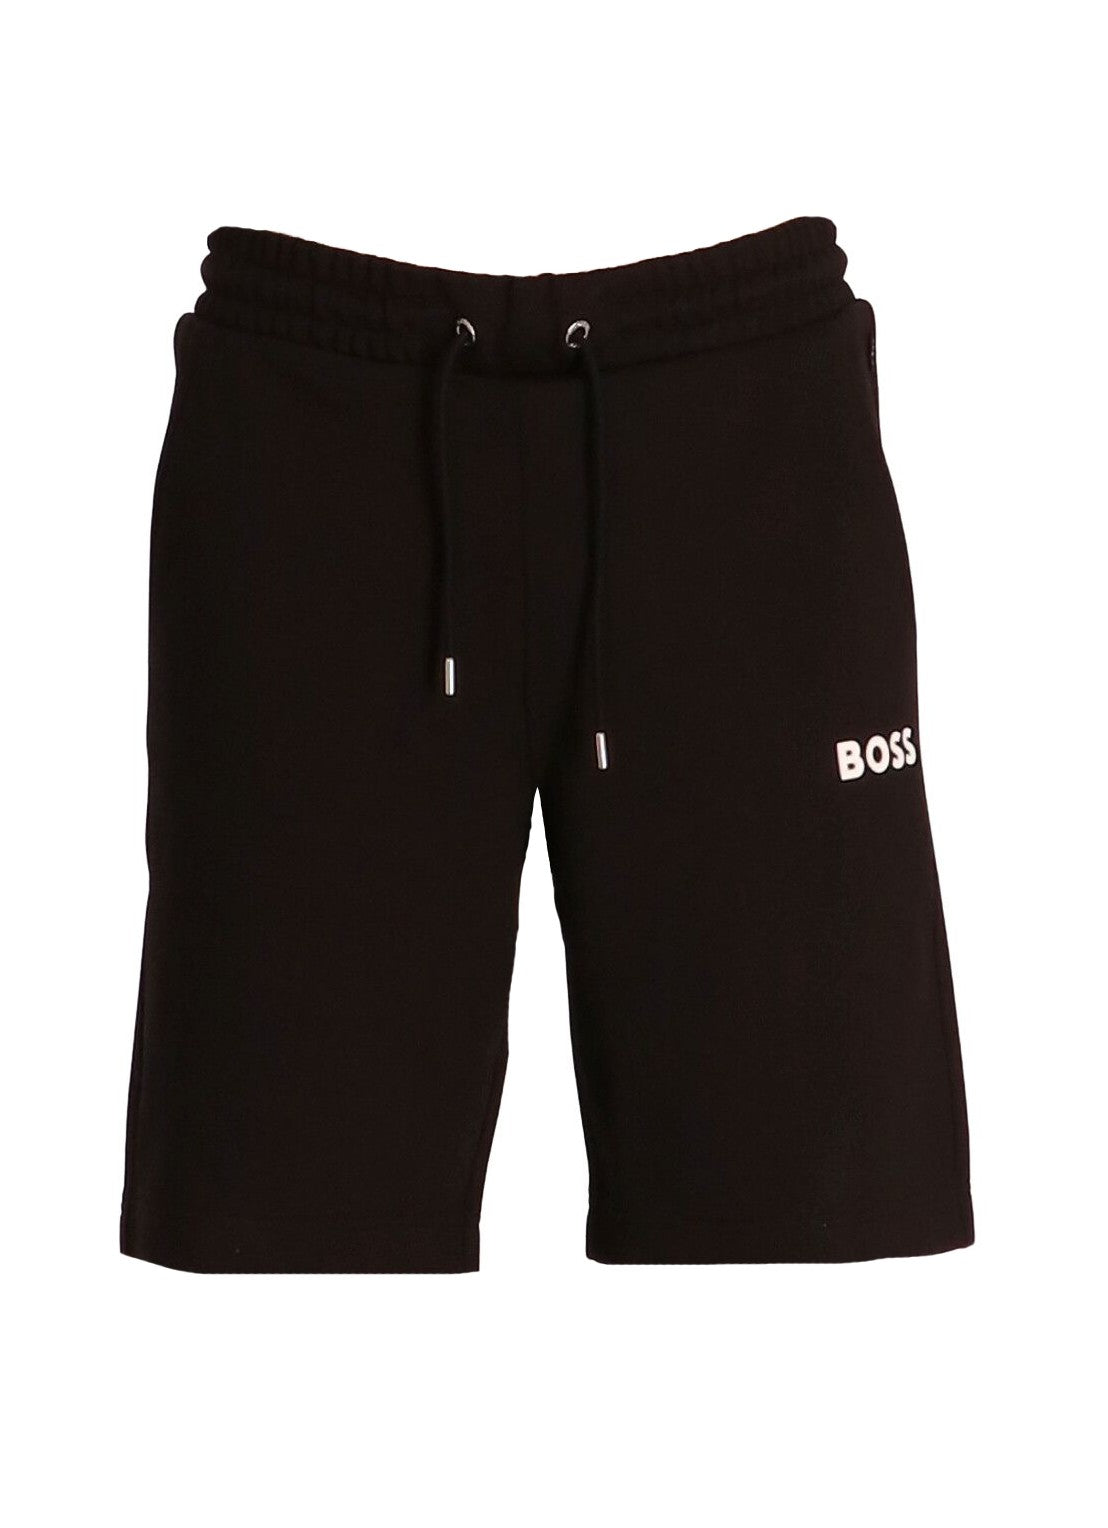 Boss Black Lamont 96 Shorts - 001 Black - Escape Menswear